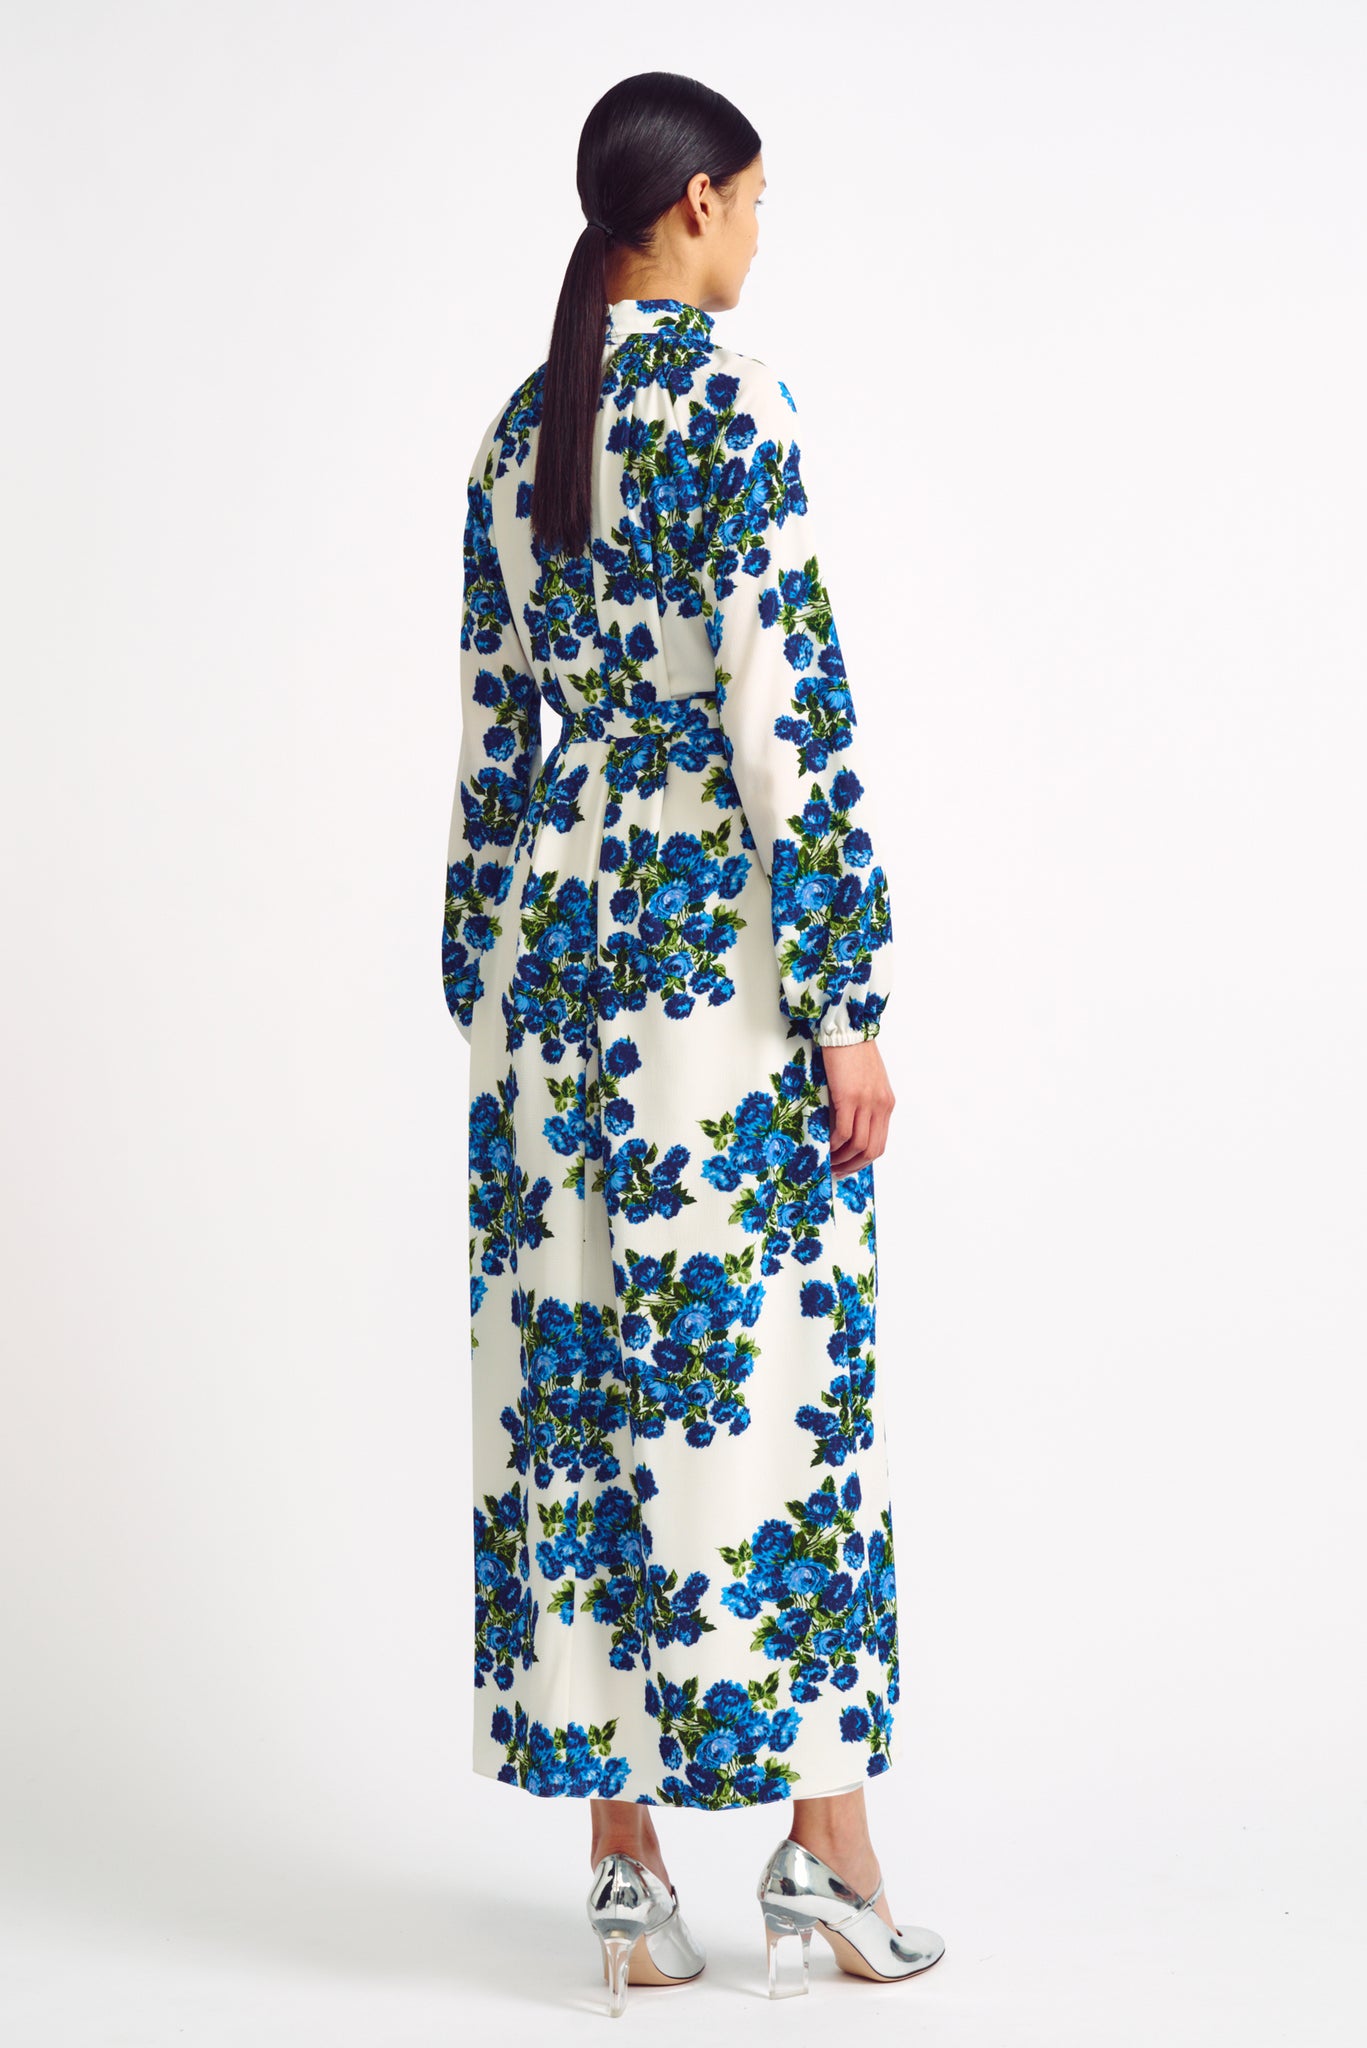 Elanda Blue Floral Print Crepe Georgette Dress | Emilia Wickstead